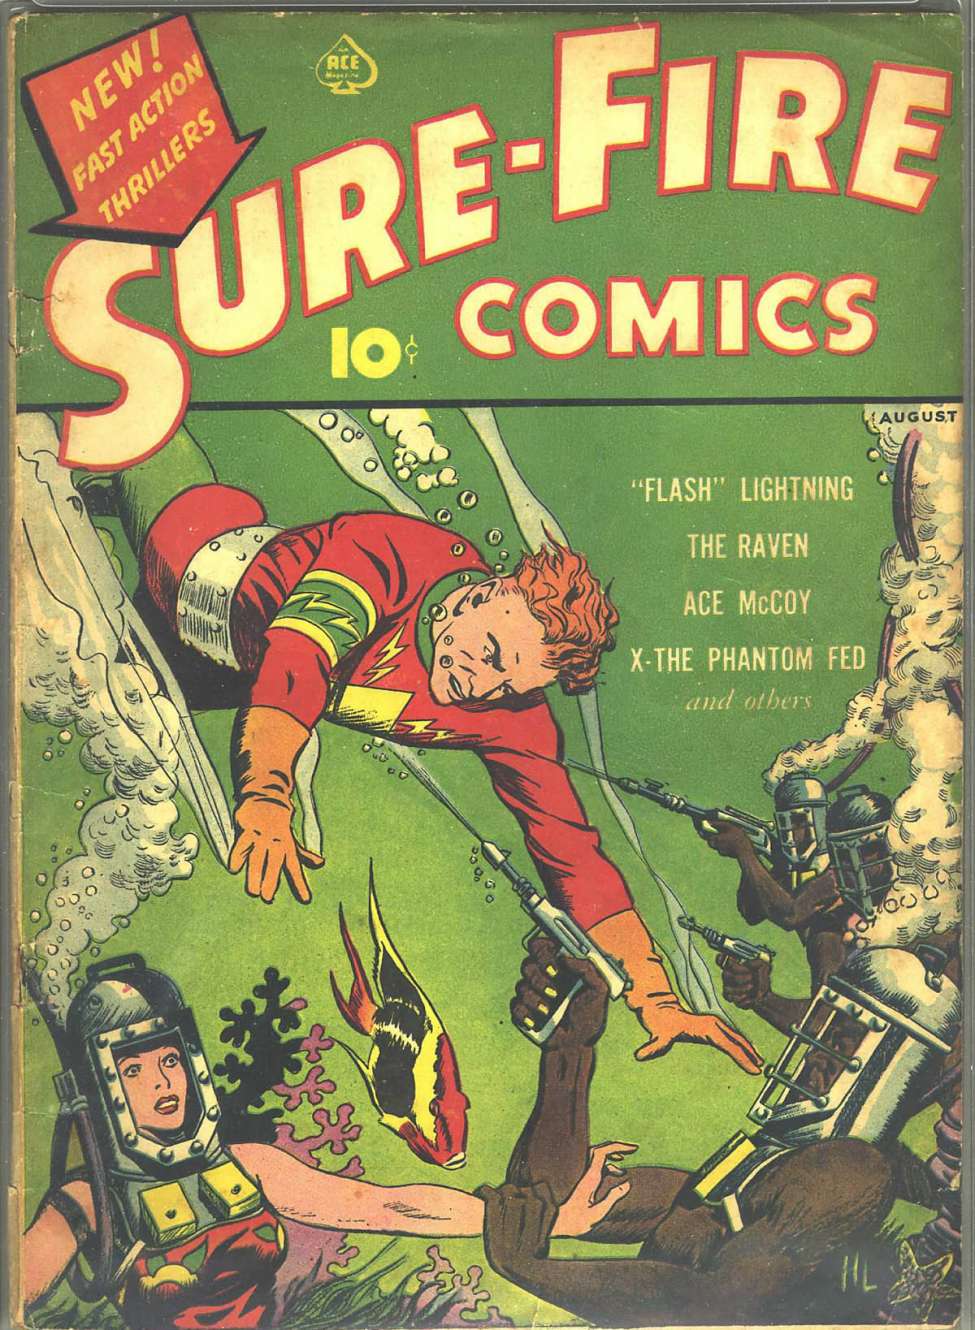 Comic Book Cover For Sure-Fire Comics 2